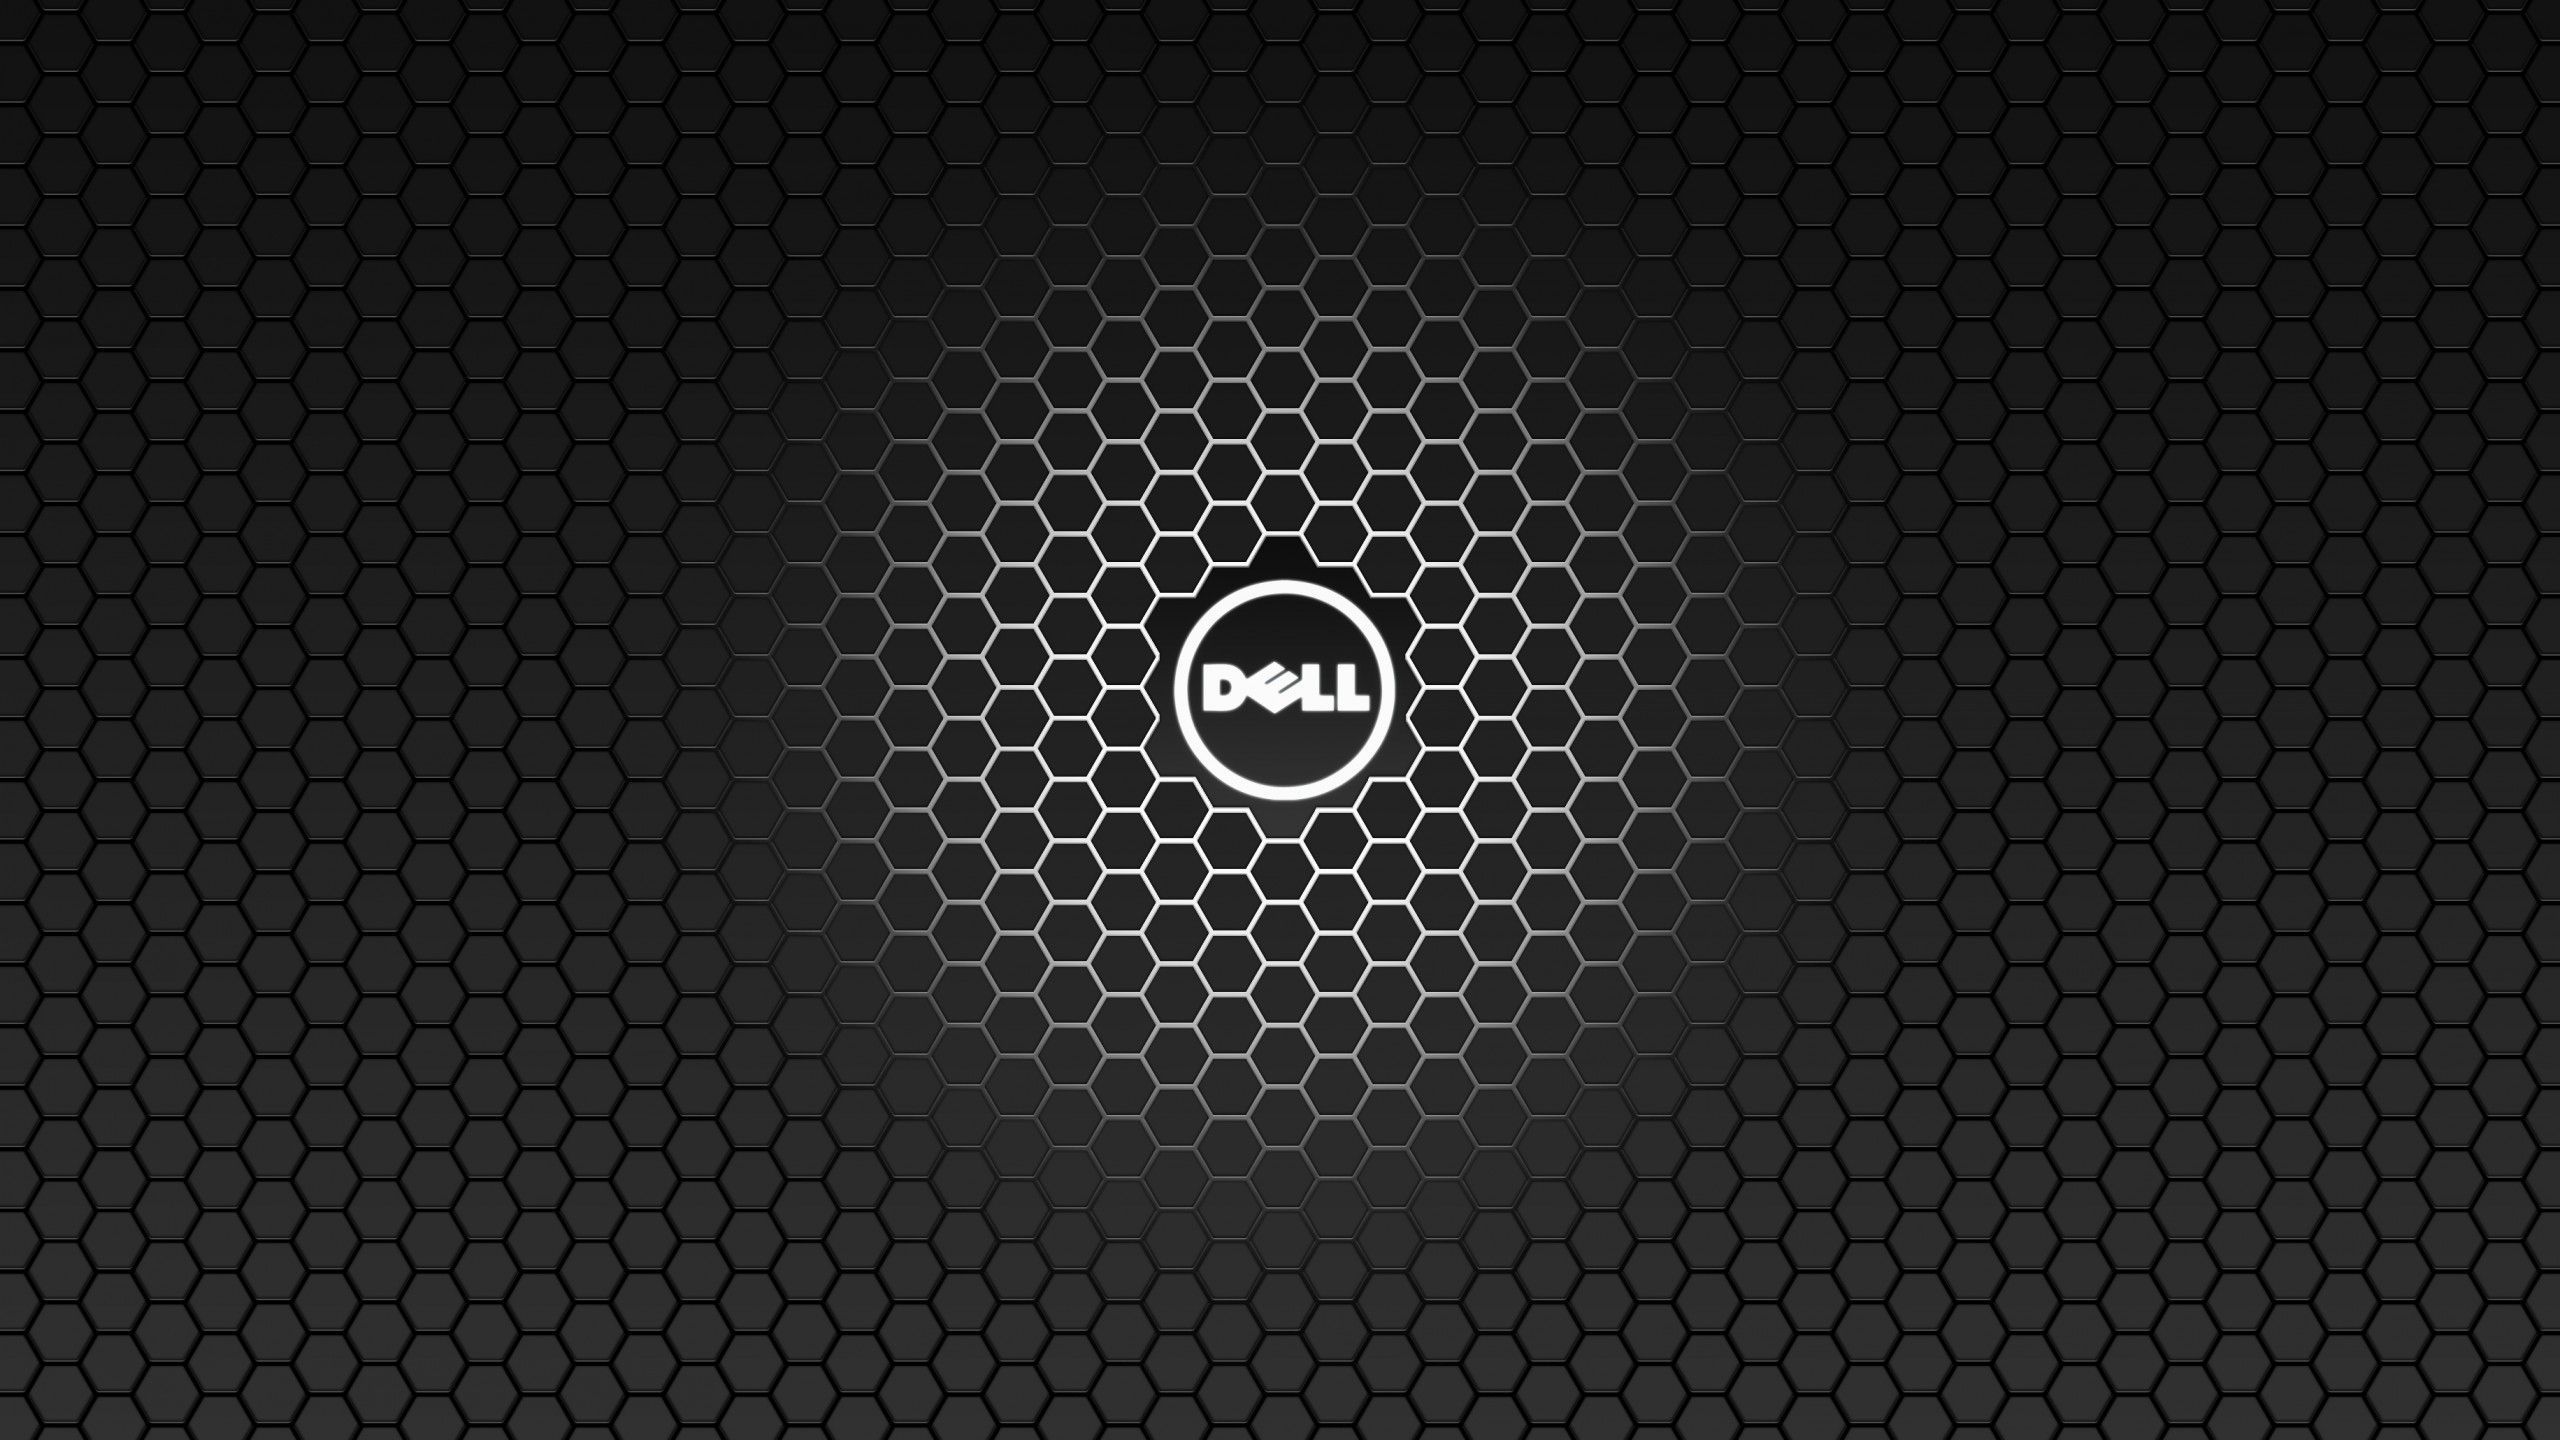 Dell G3 Wallpaper Free Dell G3 Background